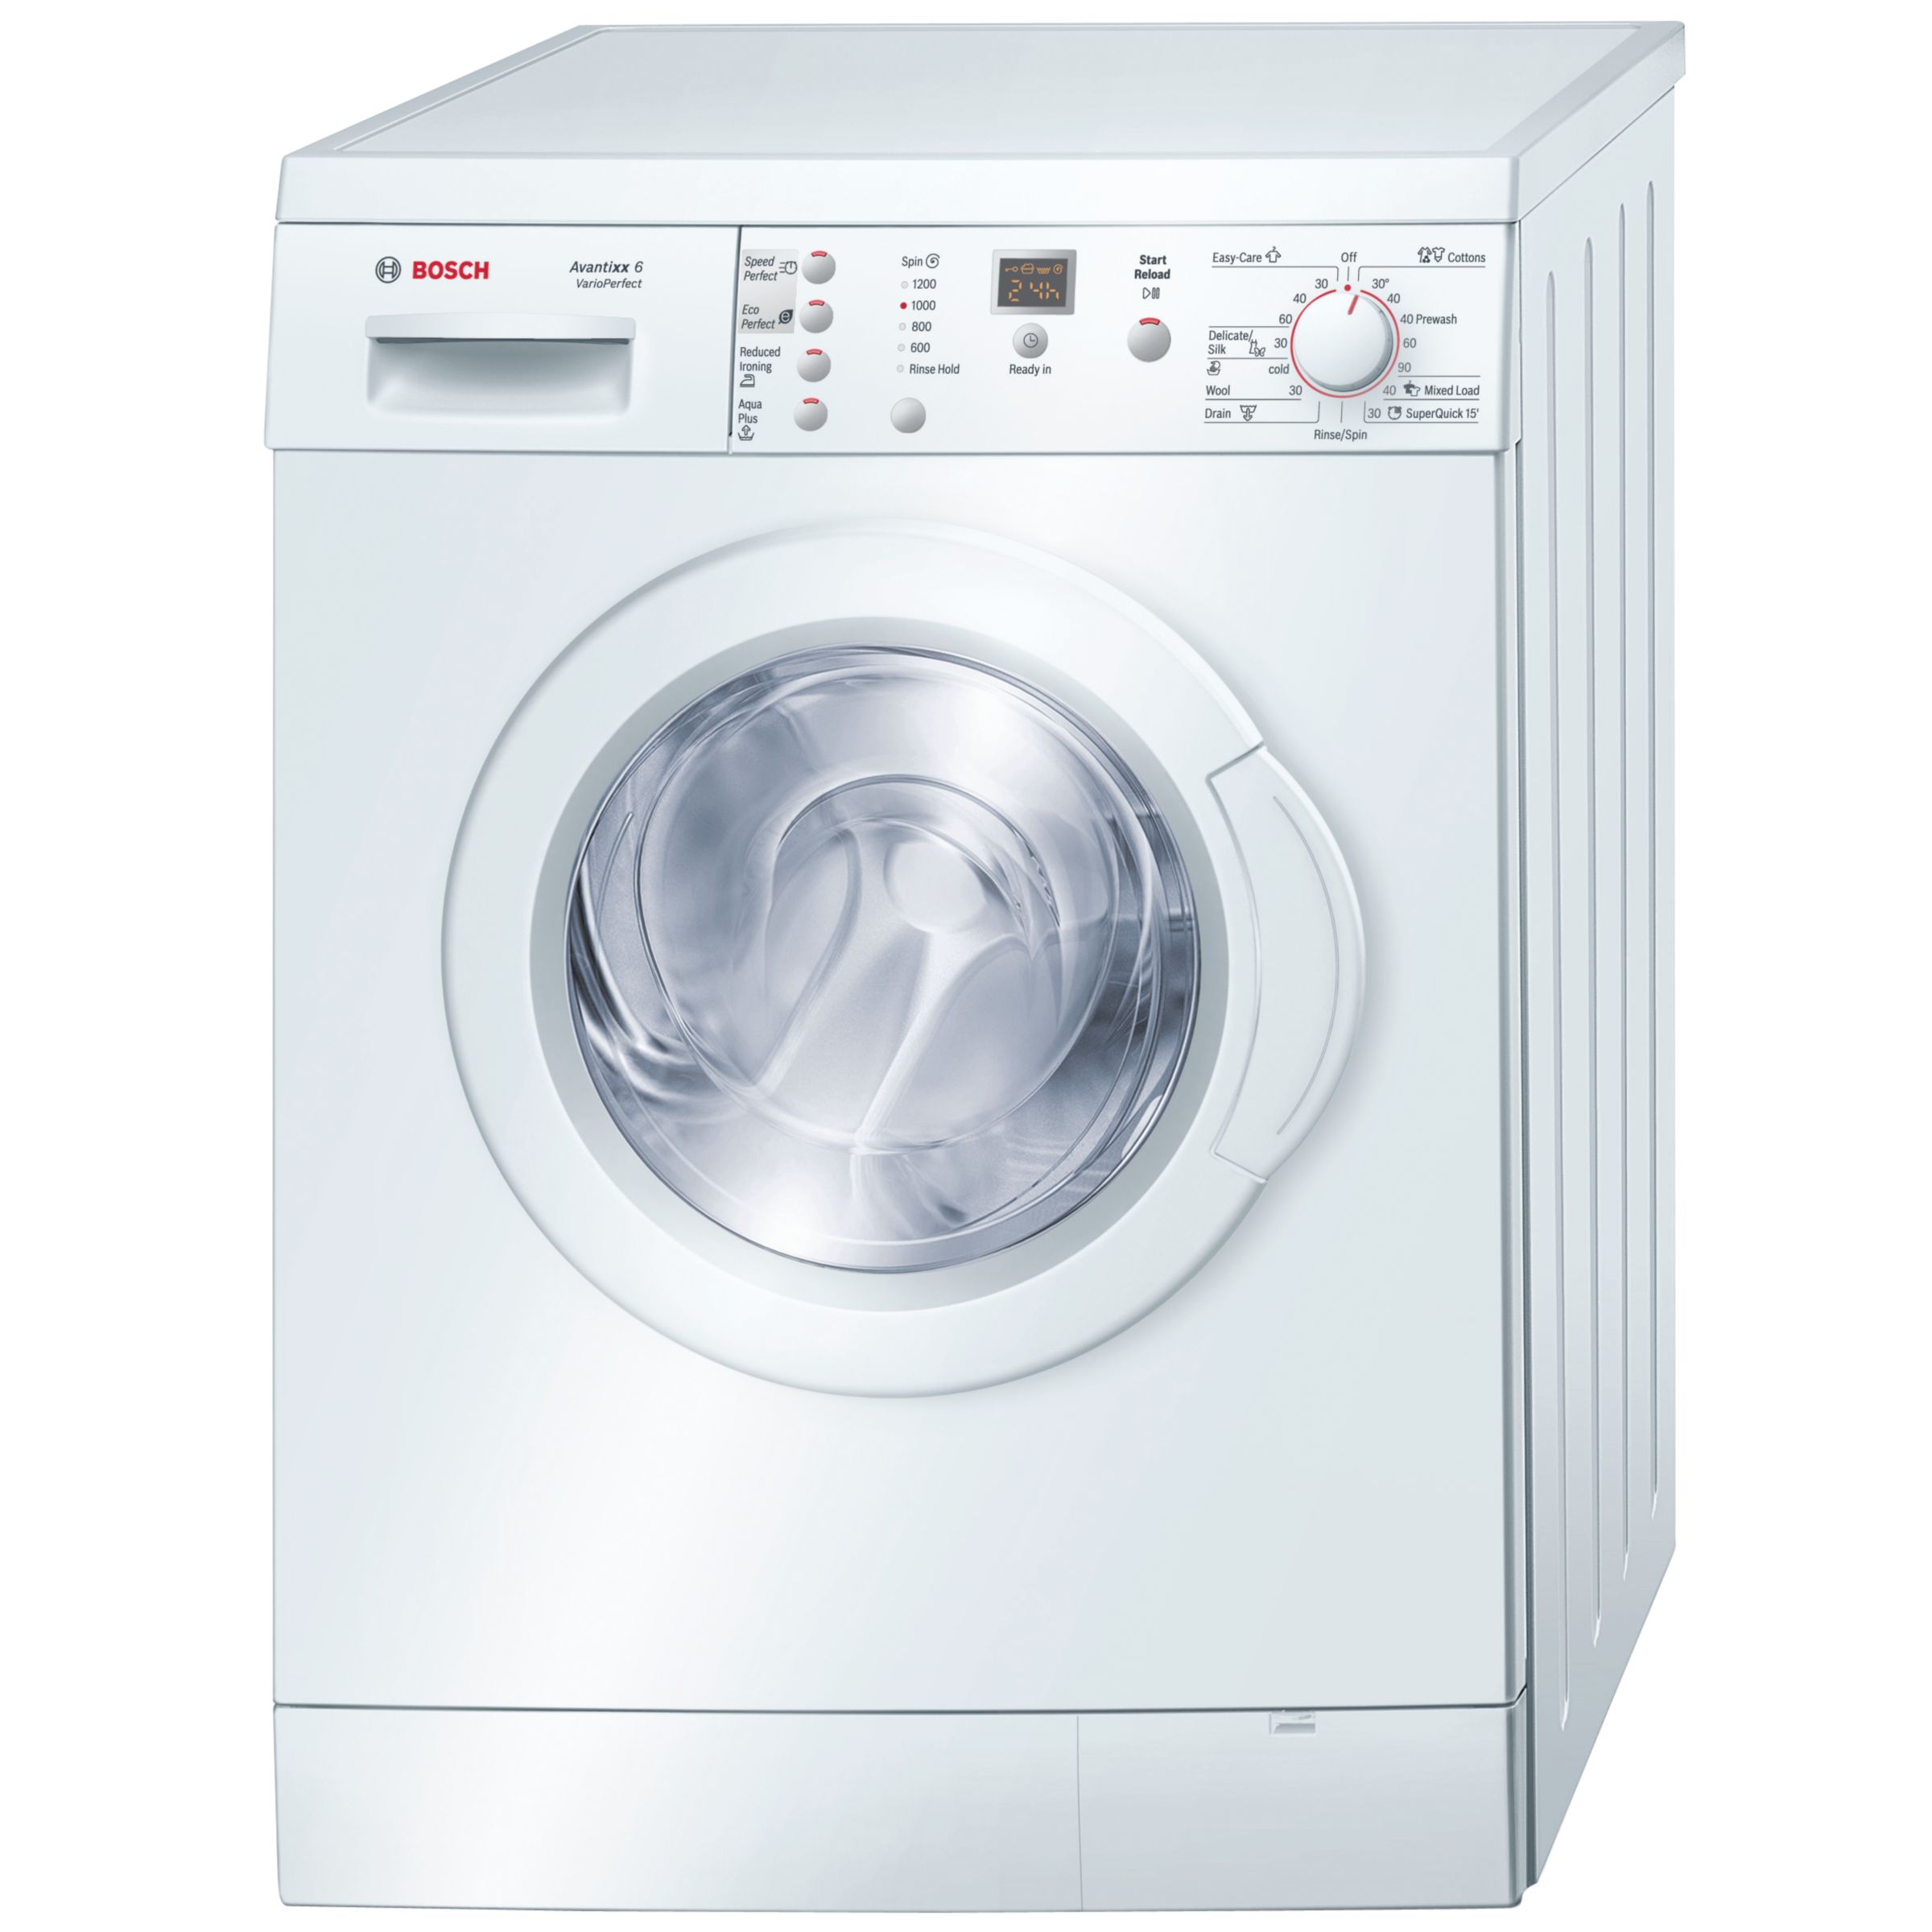 Bosch Avantixx WAE24366GB Washing Machine, White at John Lewis